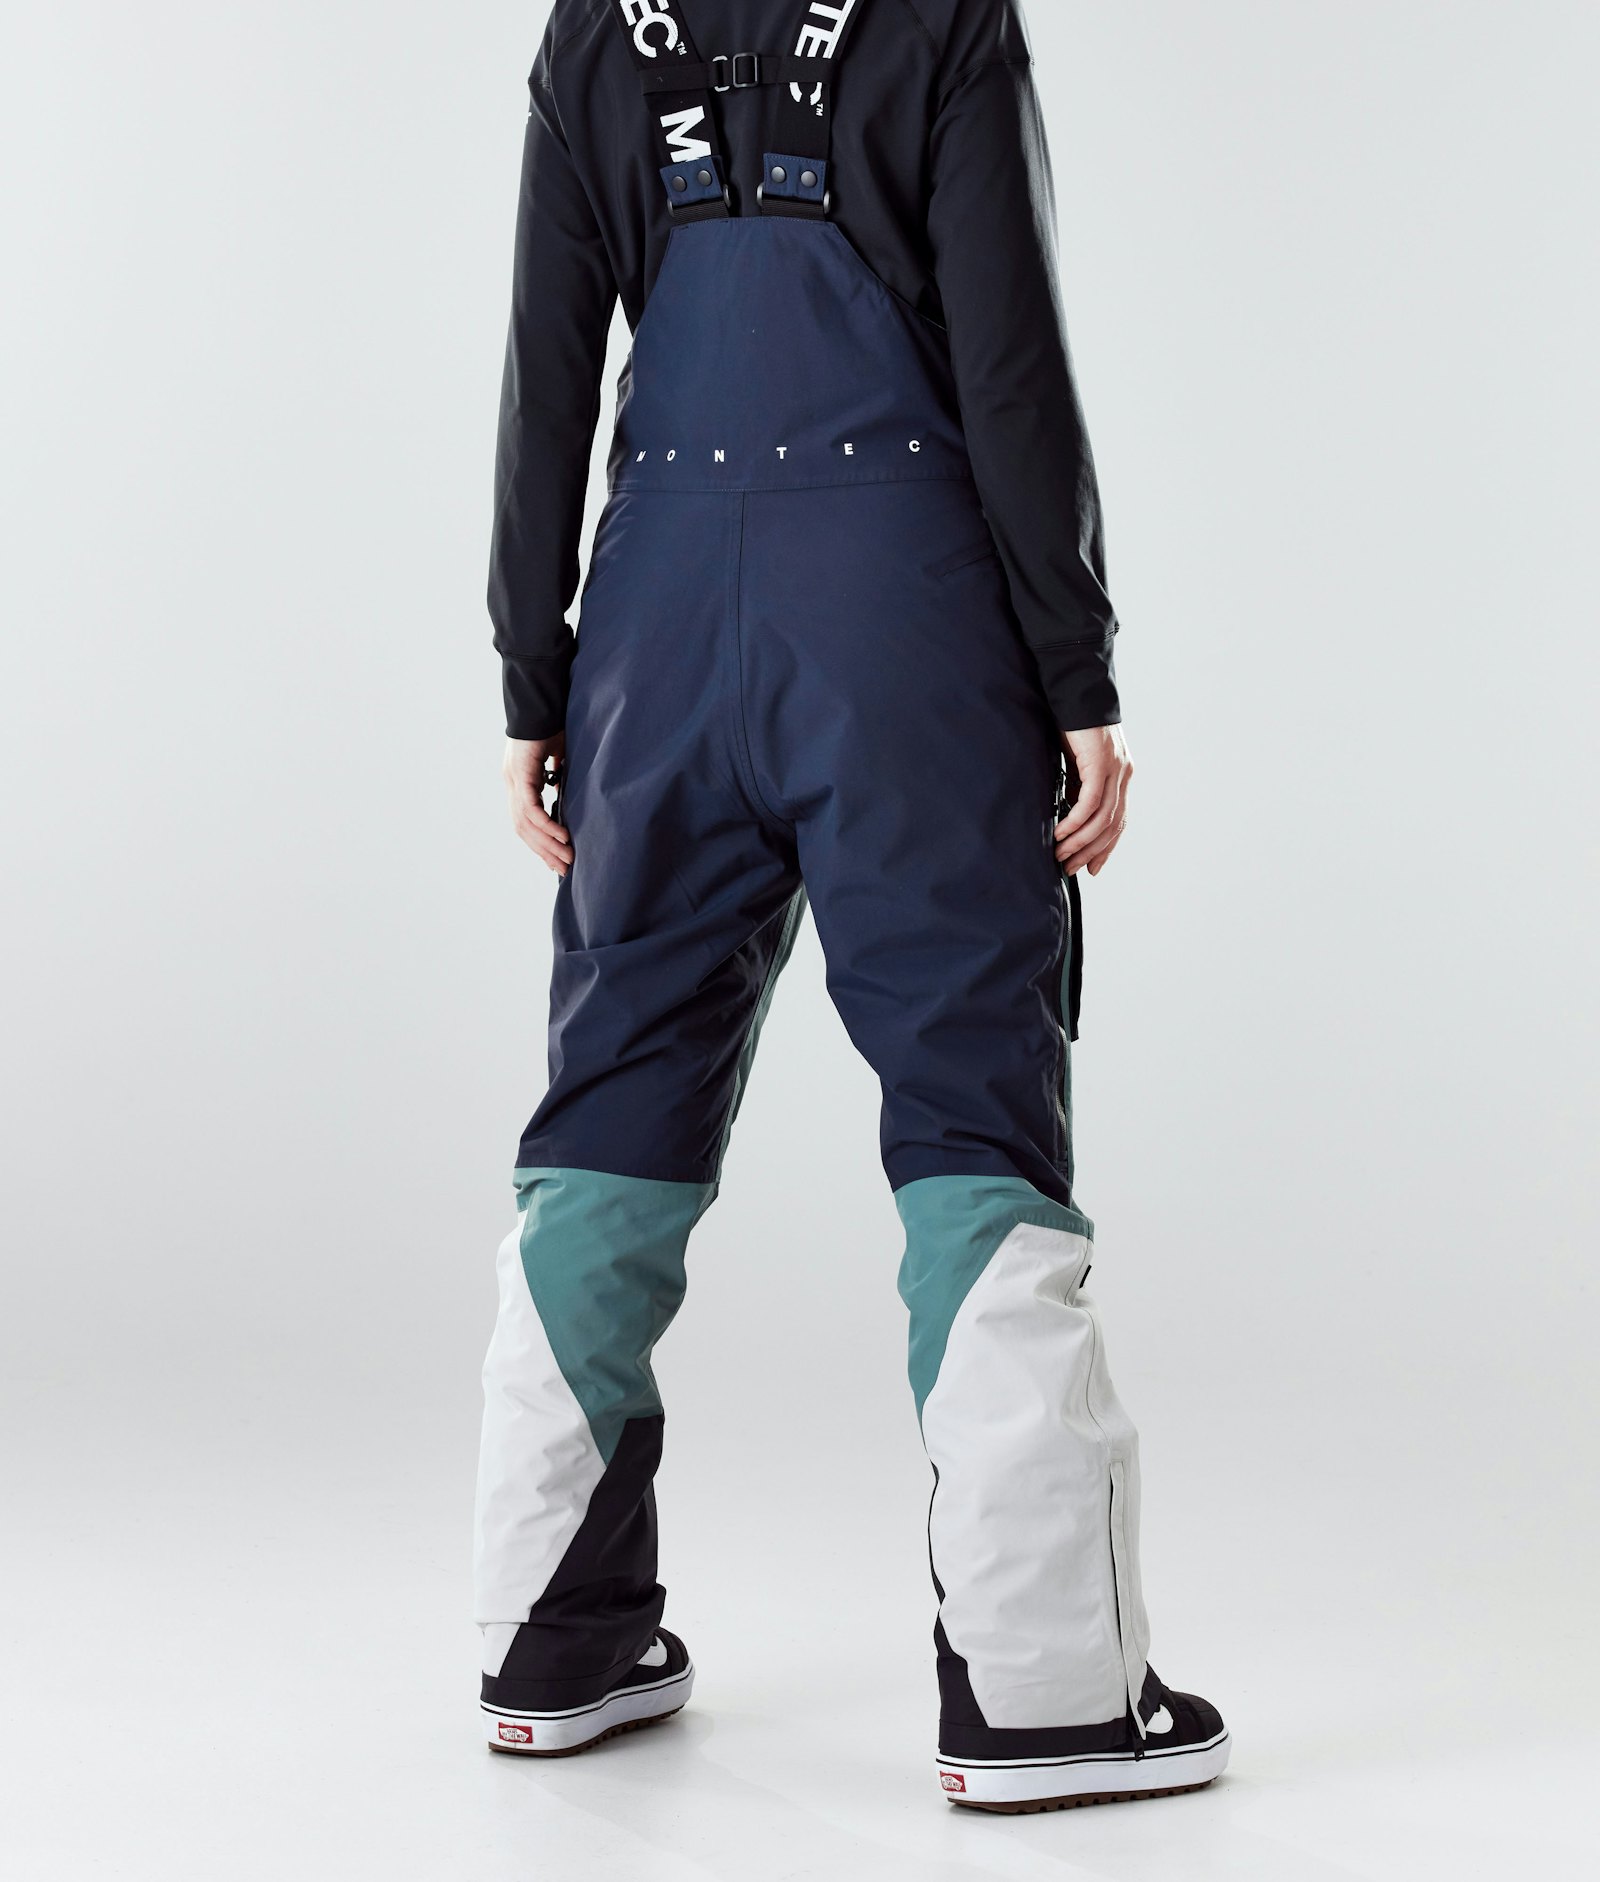 Fawk W 2020 Pantalon de Snowboard Femme Marine/Atlantic/Light Grey